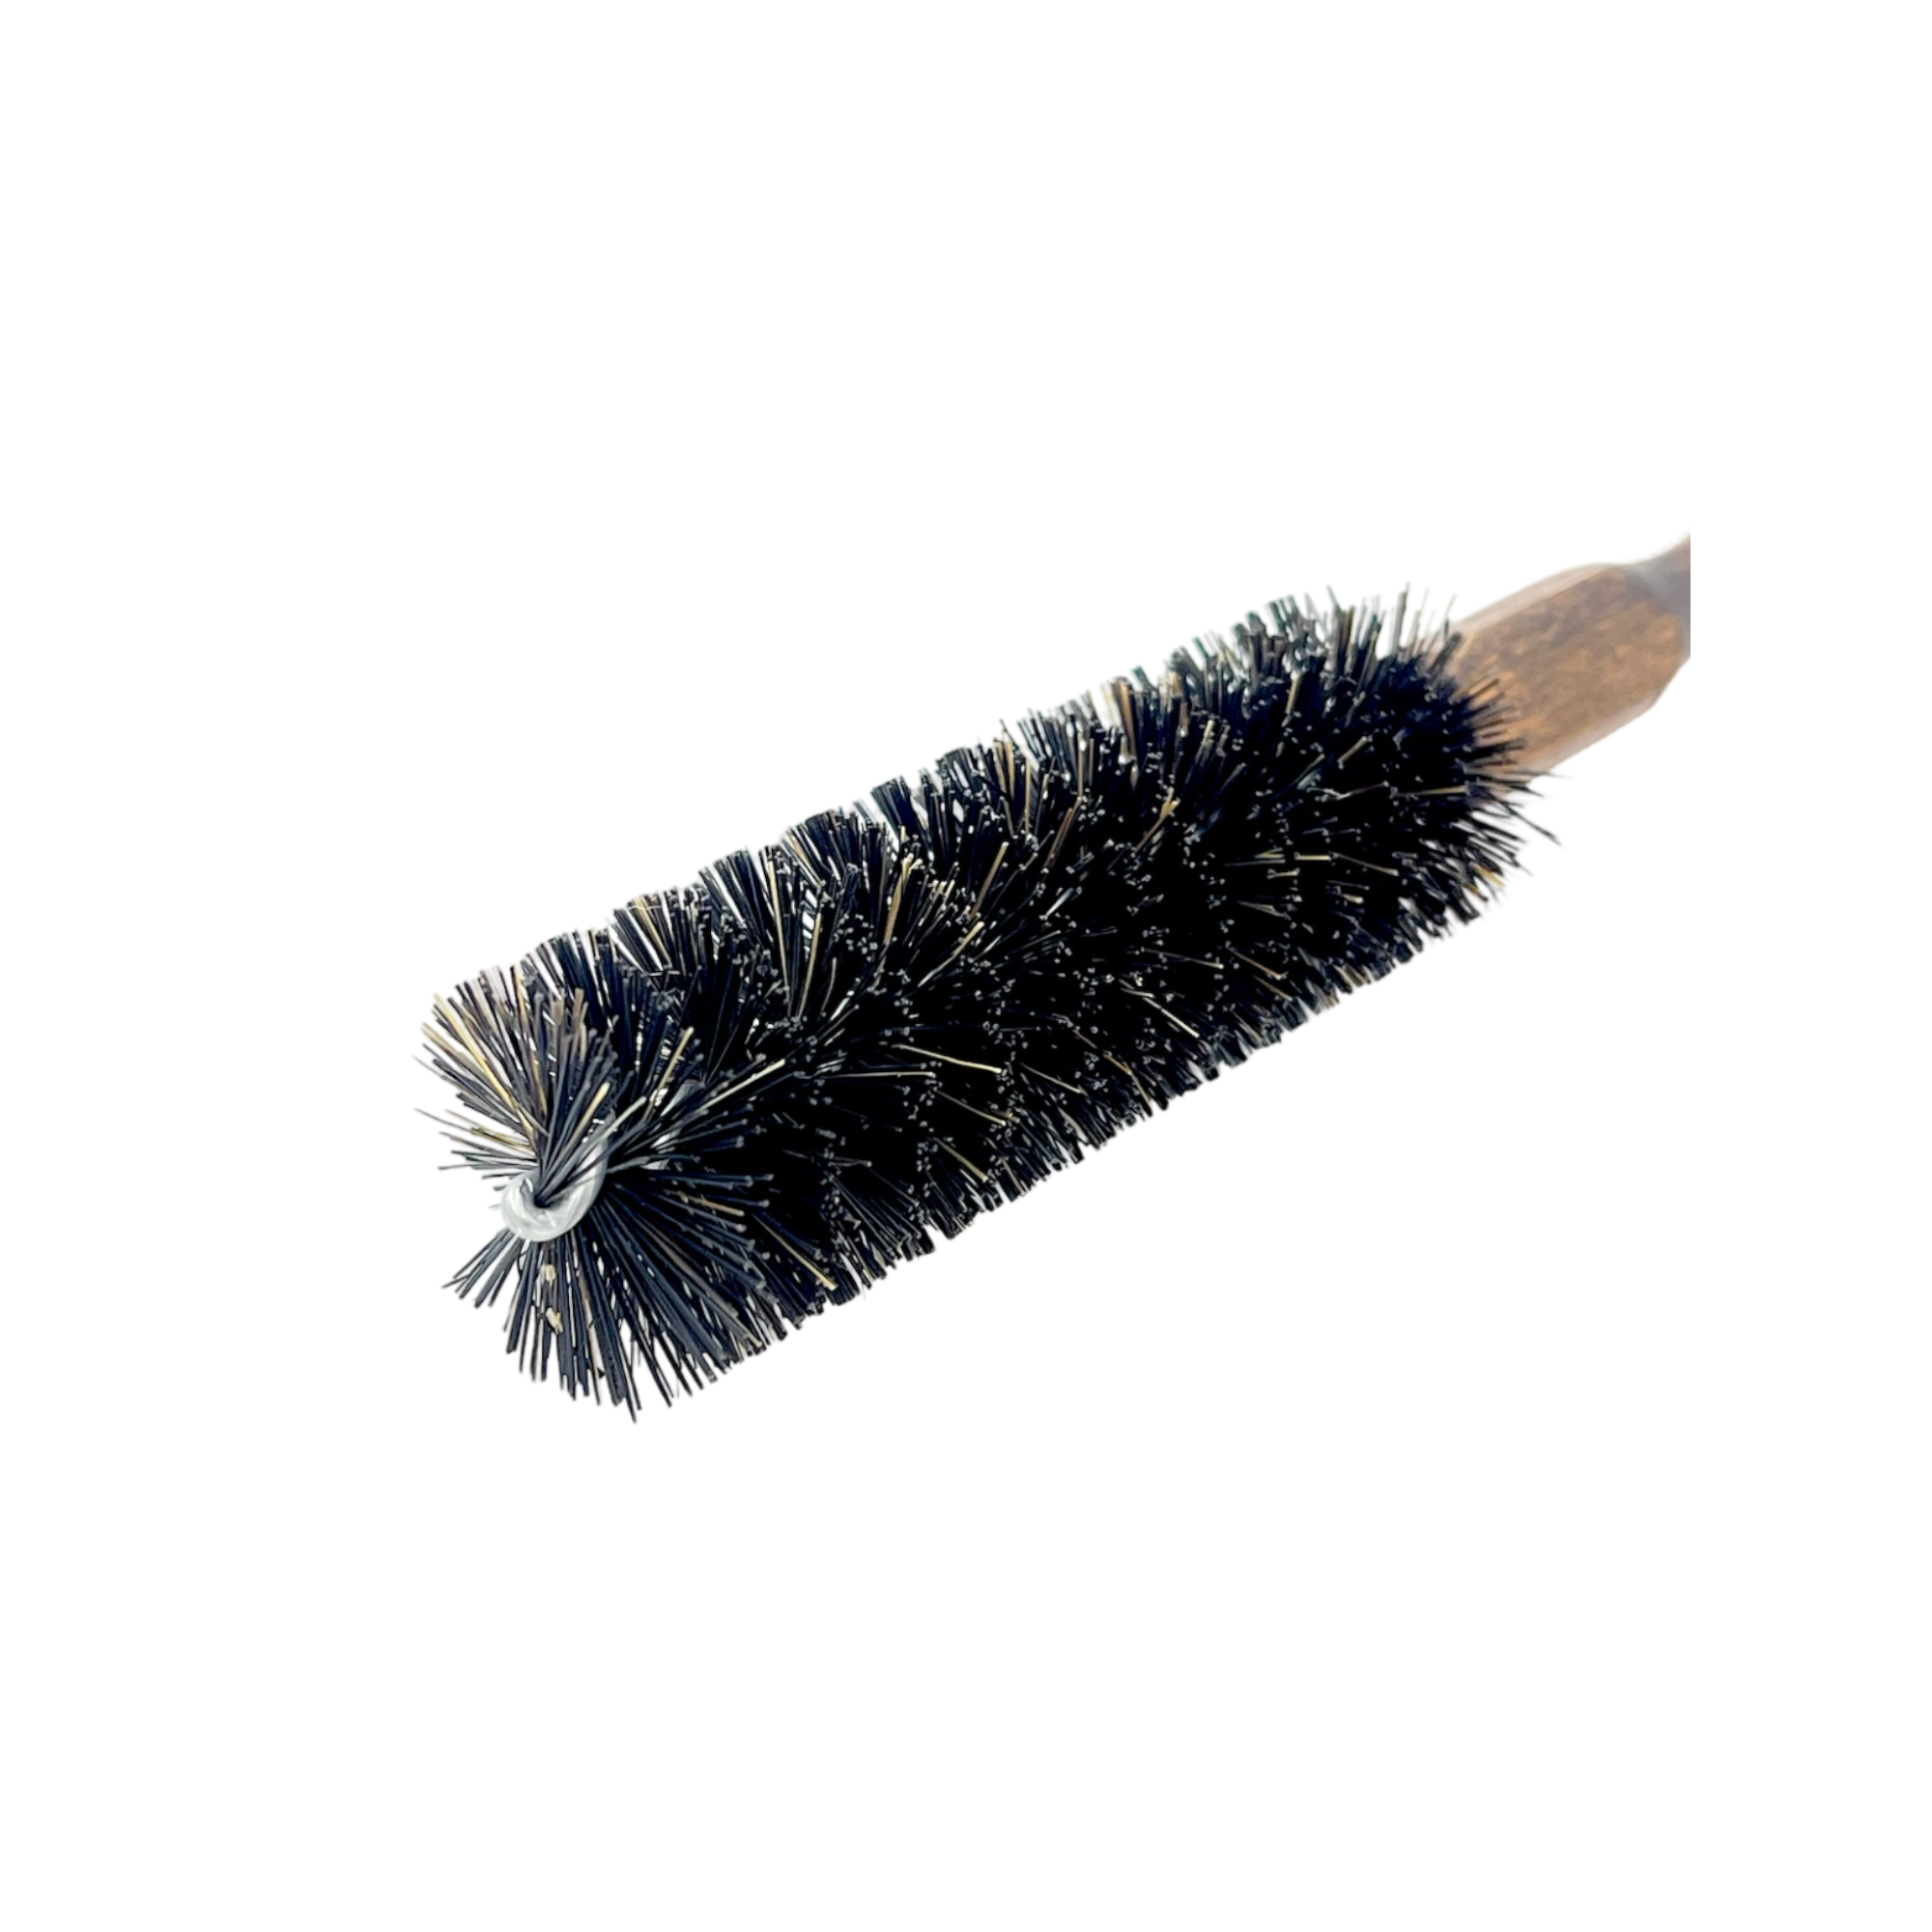 Dural Beech wood curling hair brush with boar bristles